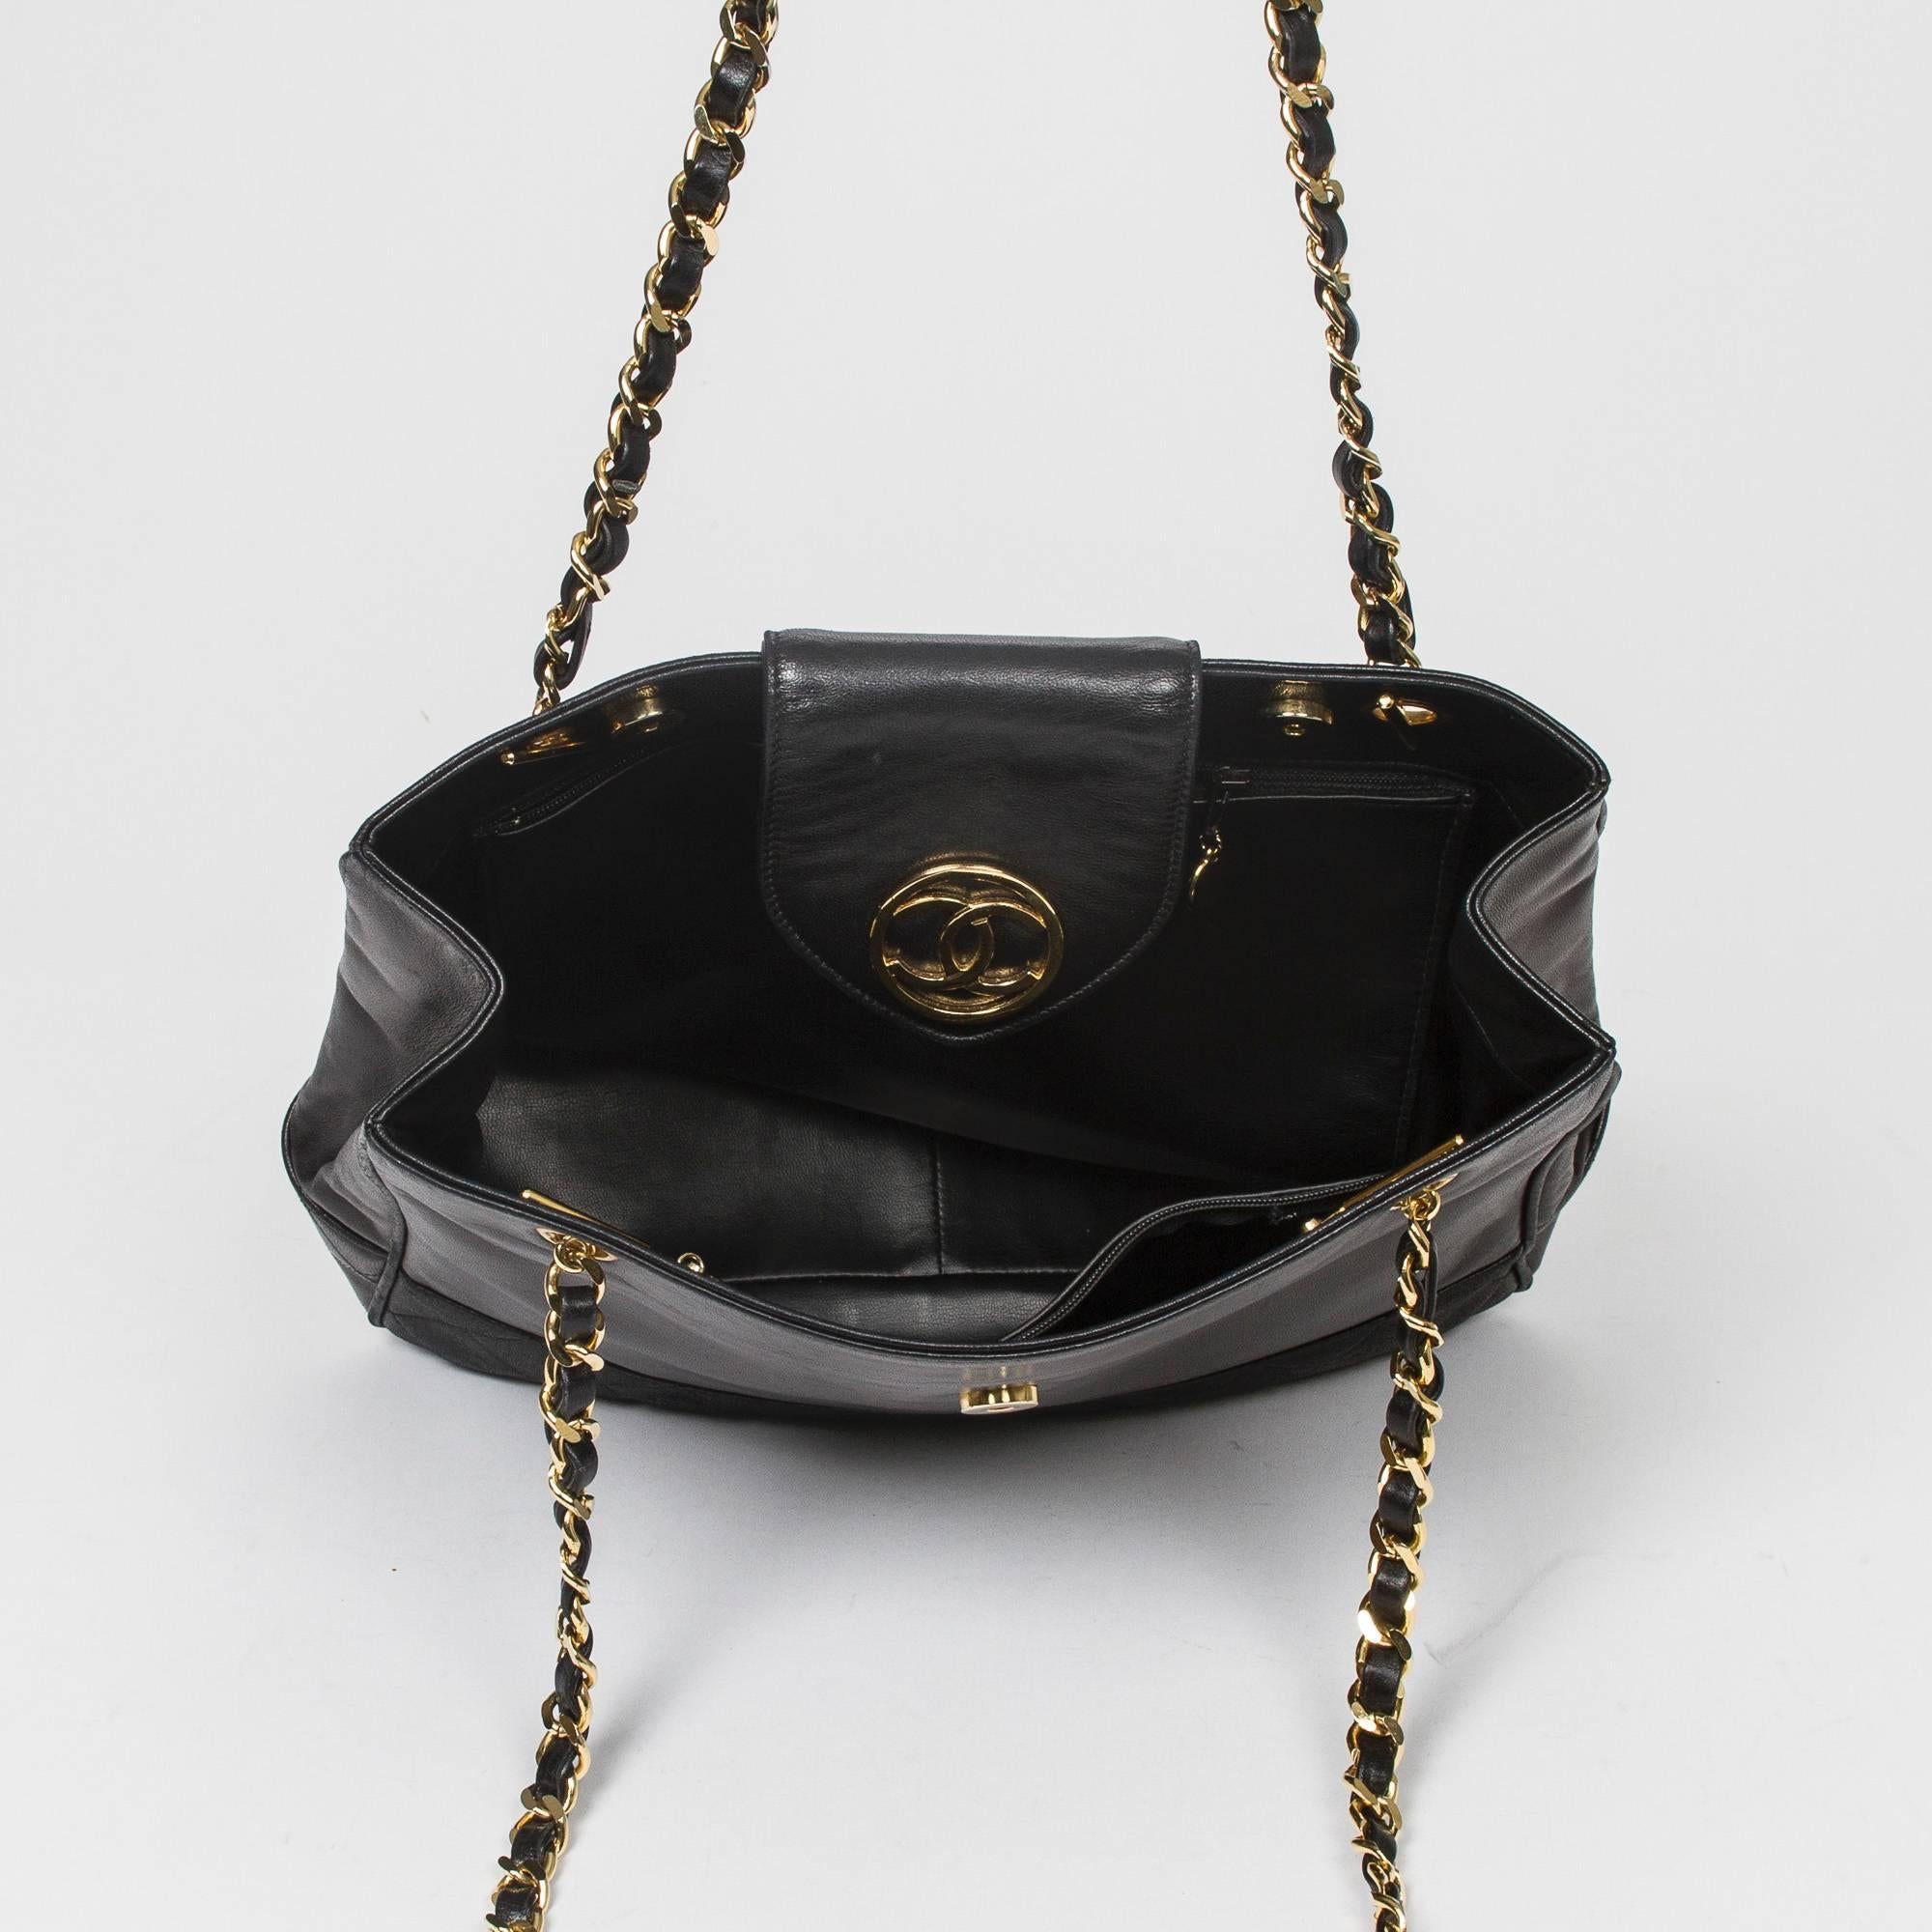 Chanel - Vintage Tote Black Leather 2